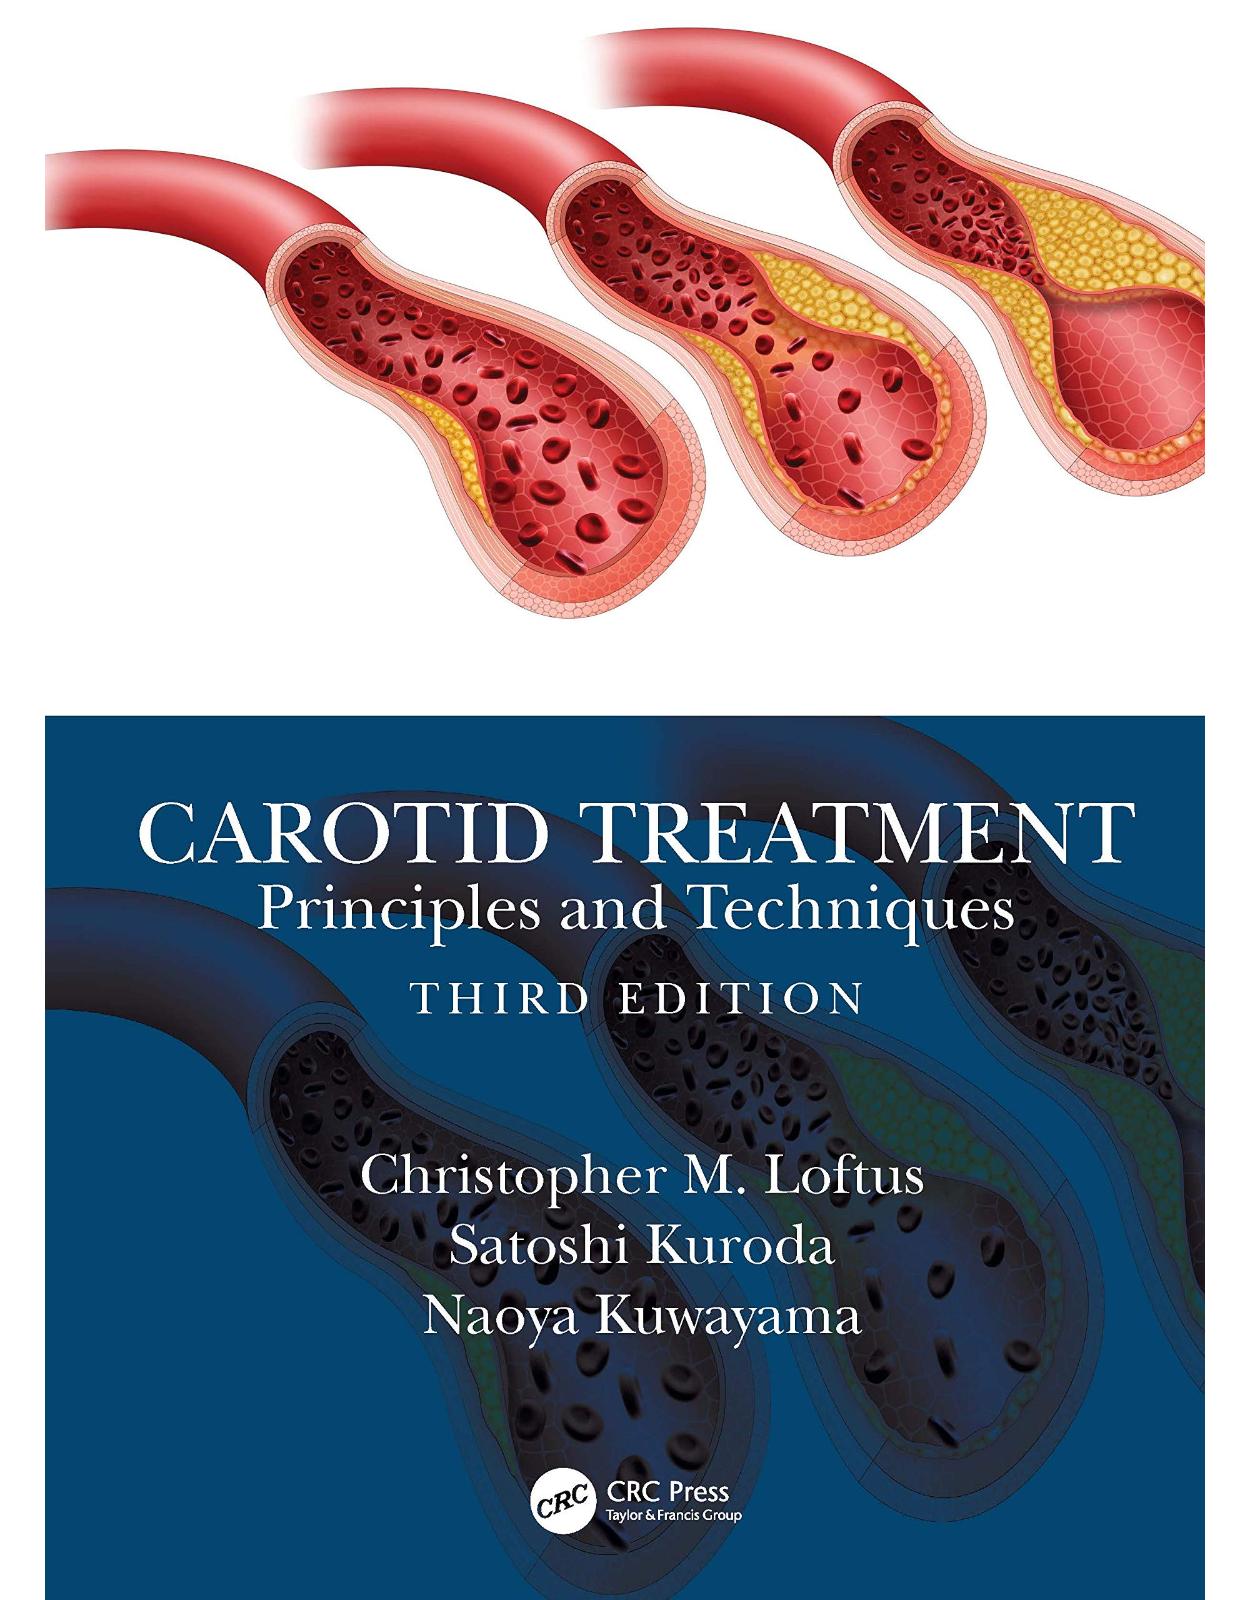 Carotid Treatment: Principles and Techniques